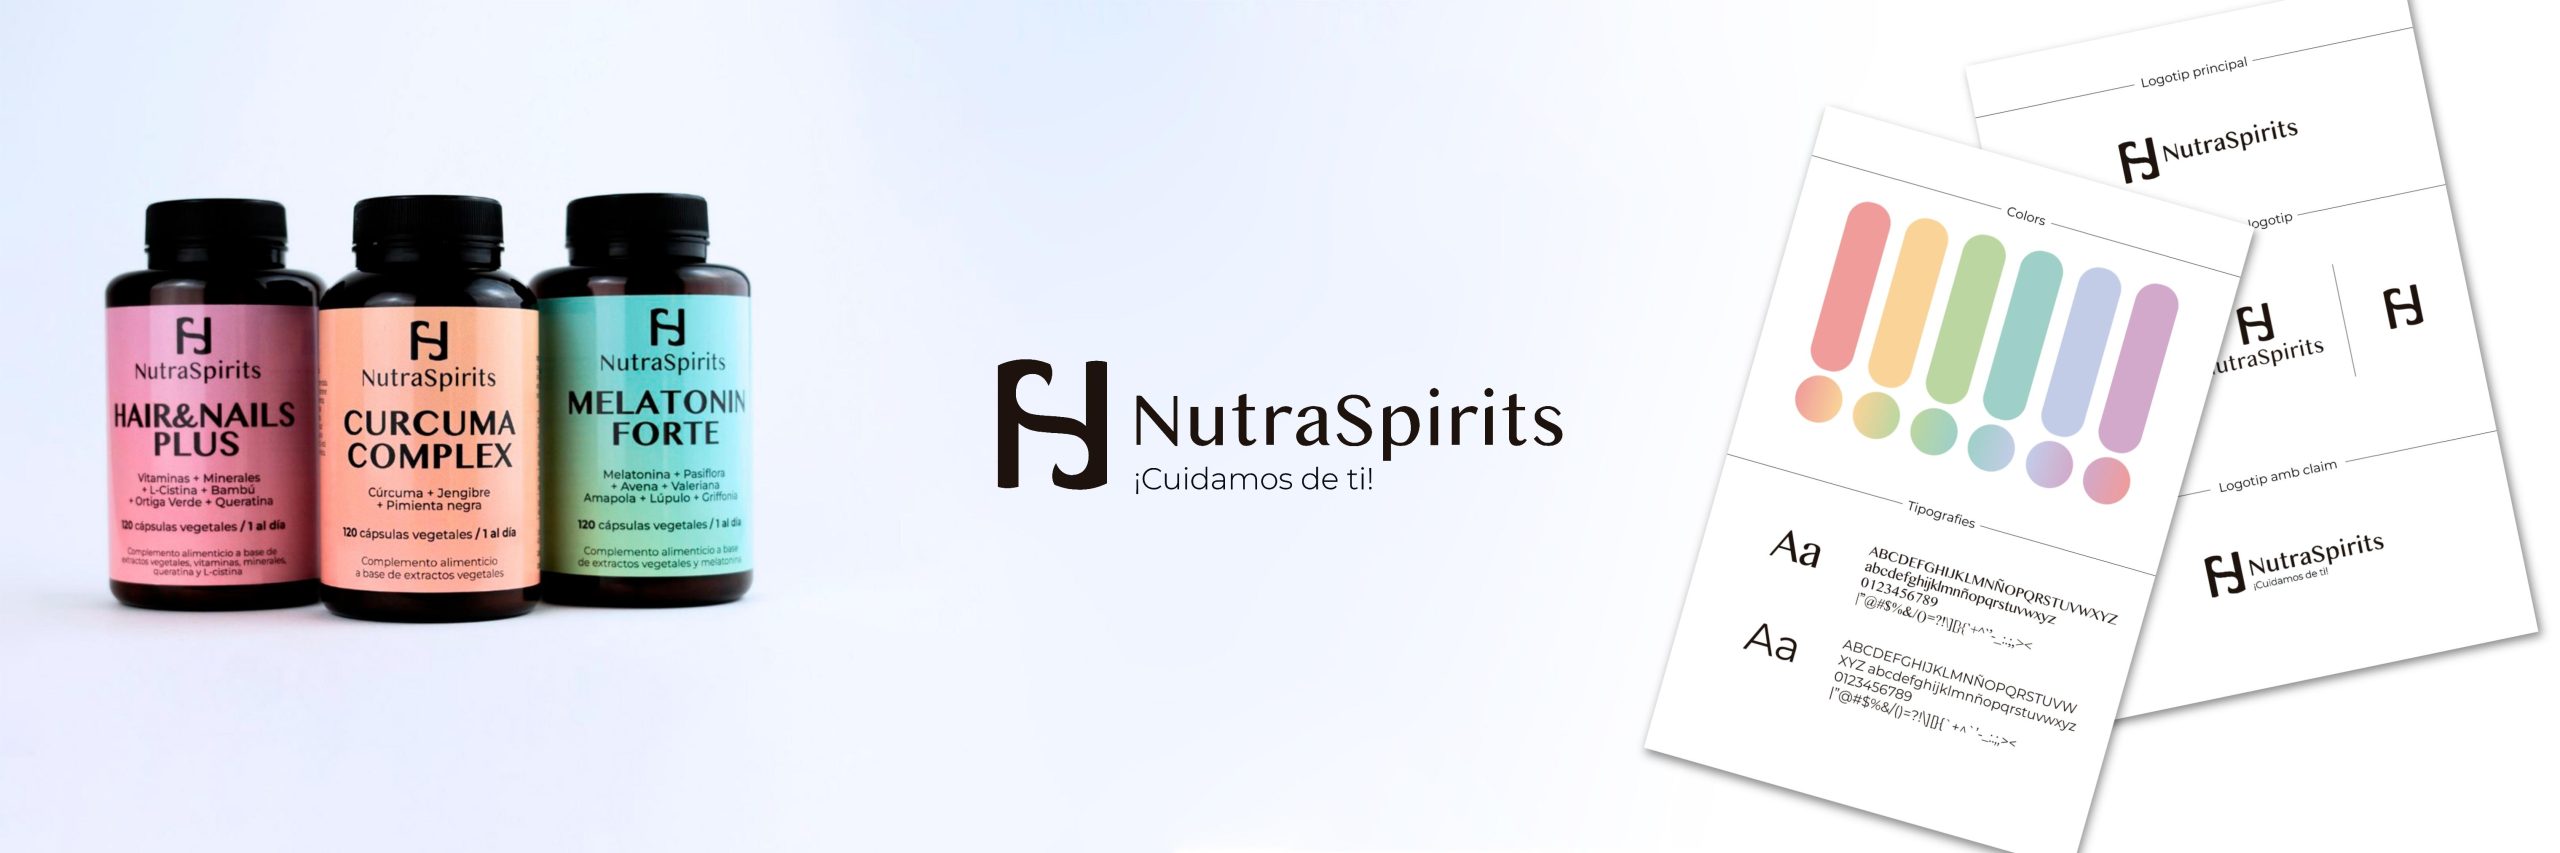 Nutraspirits - Branding, packaging i fotografia de producte